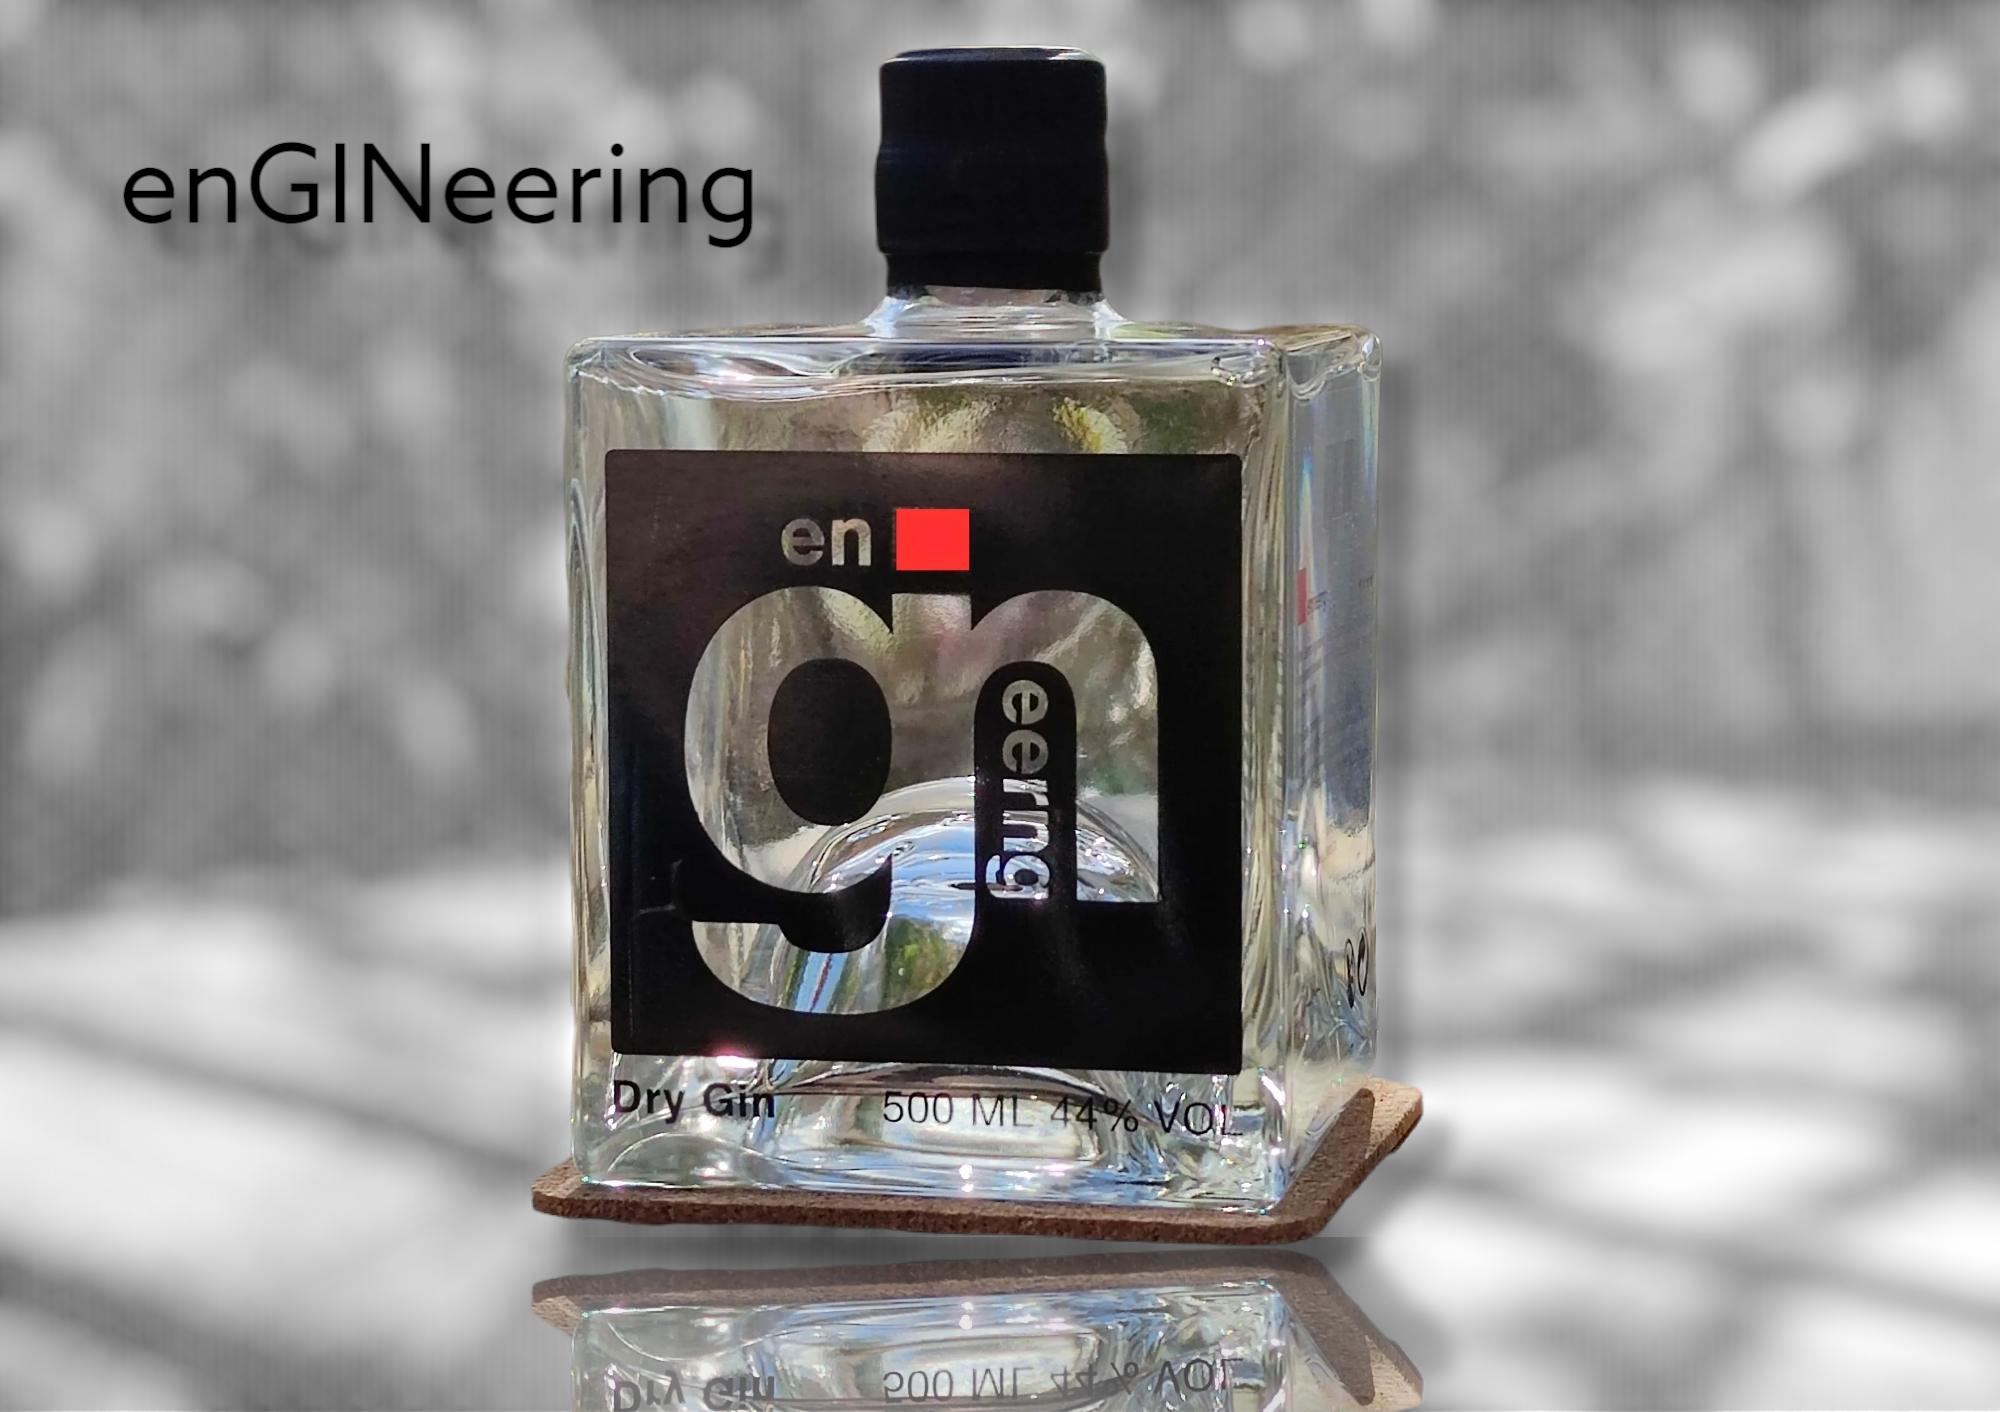 Distilled Dry Gin enGINeering 44% VOL 0,5 l